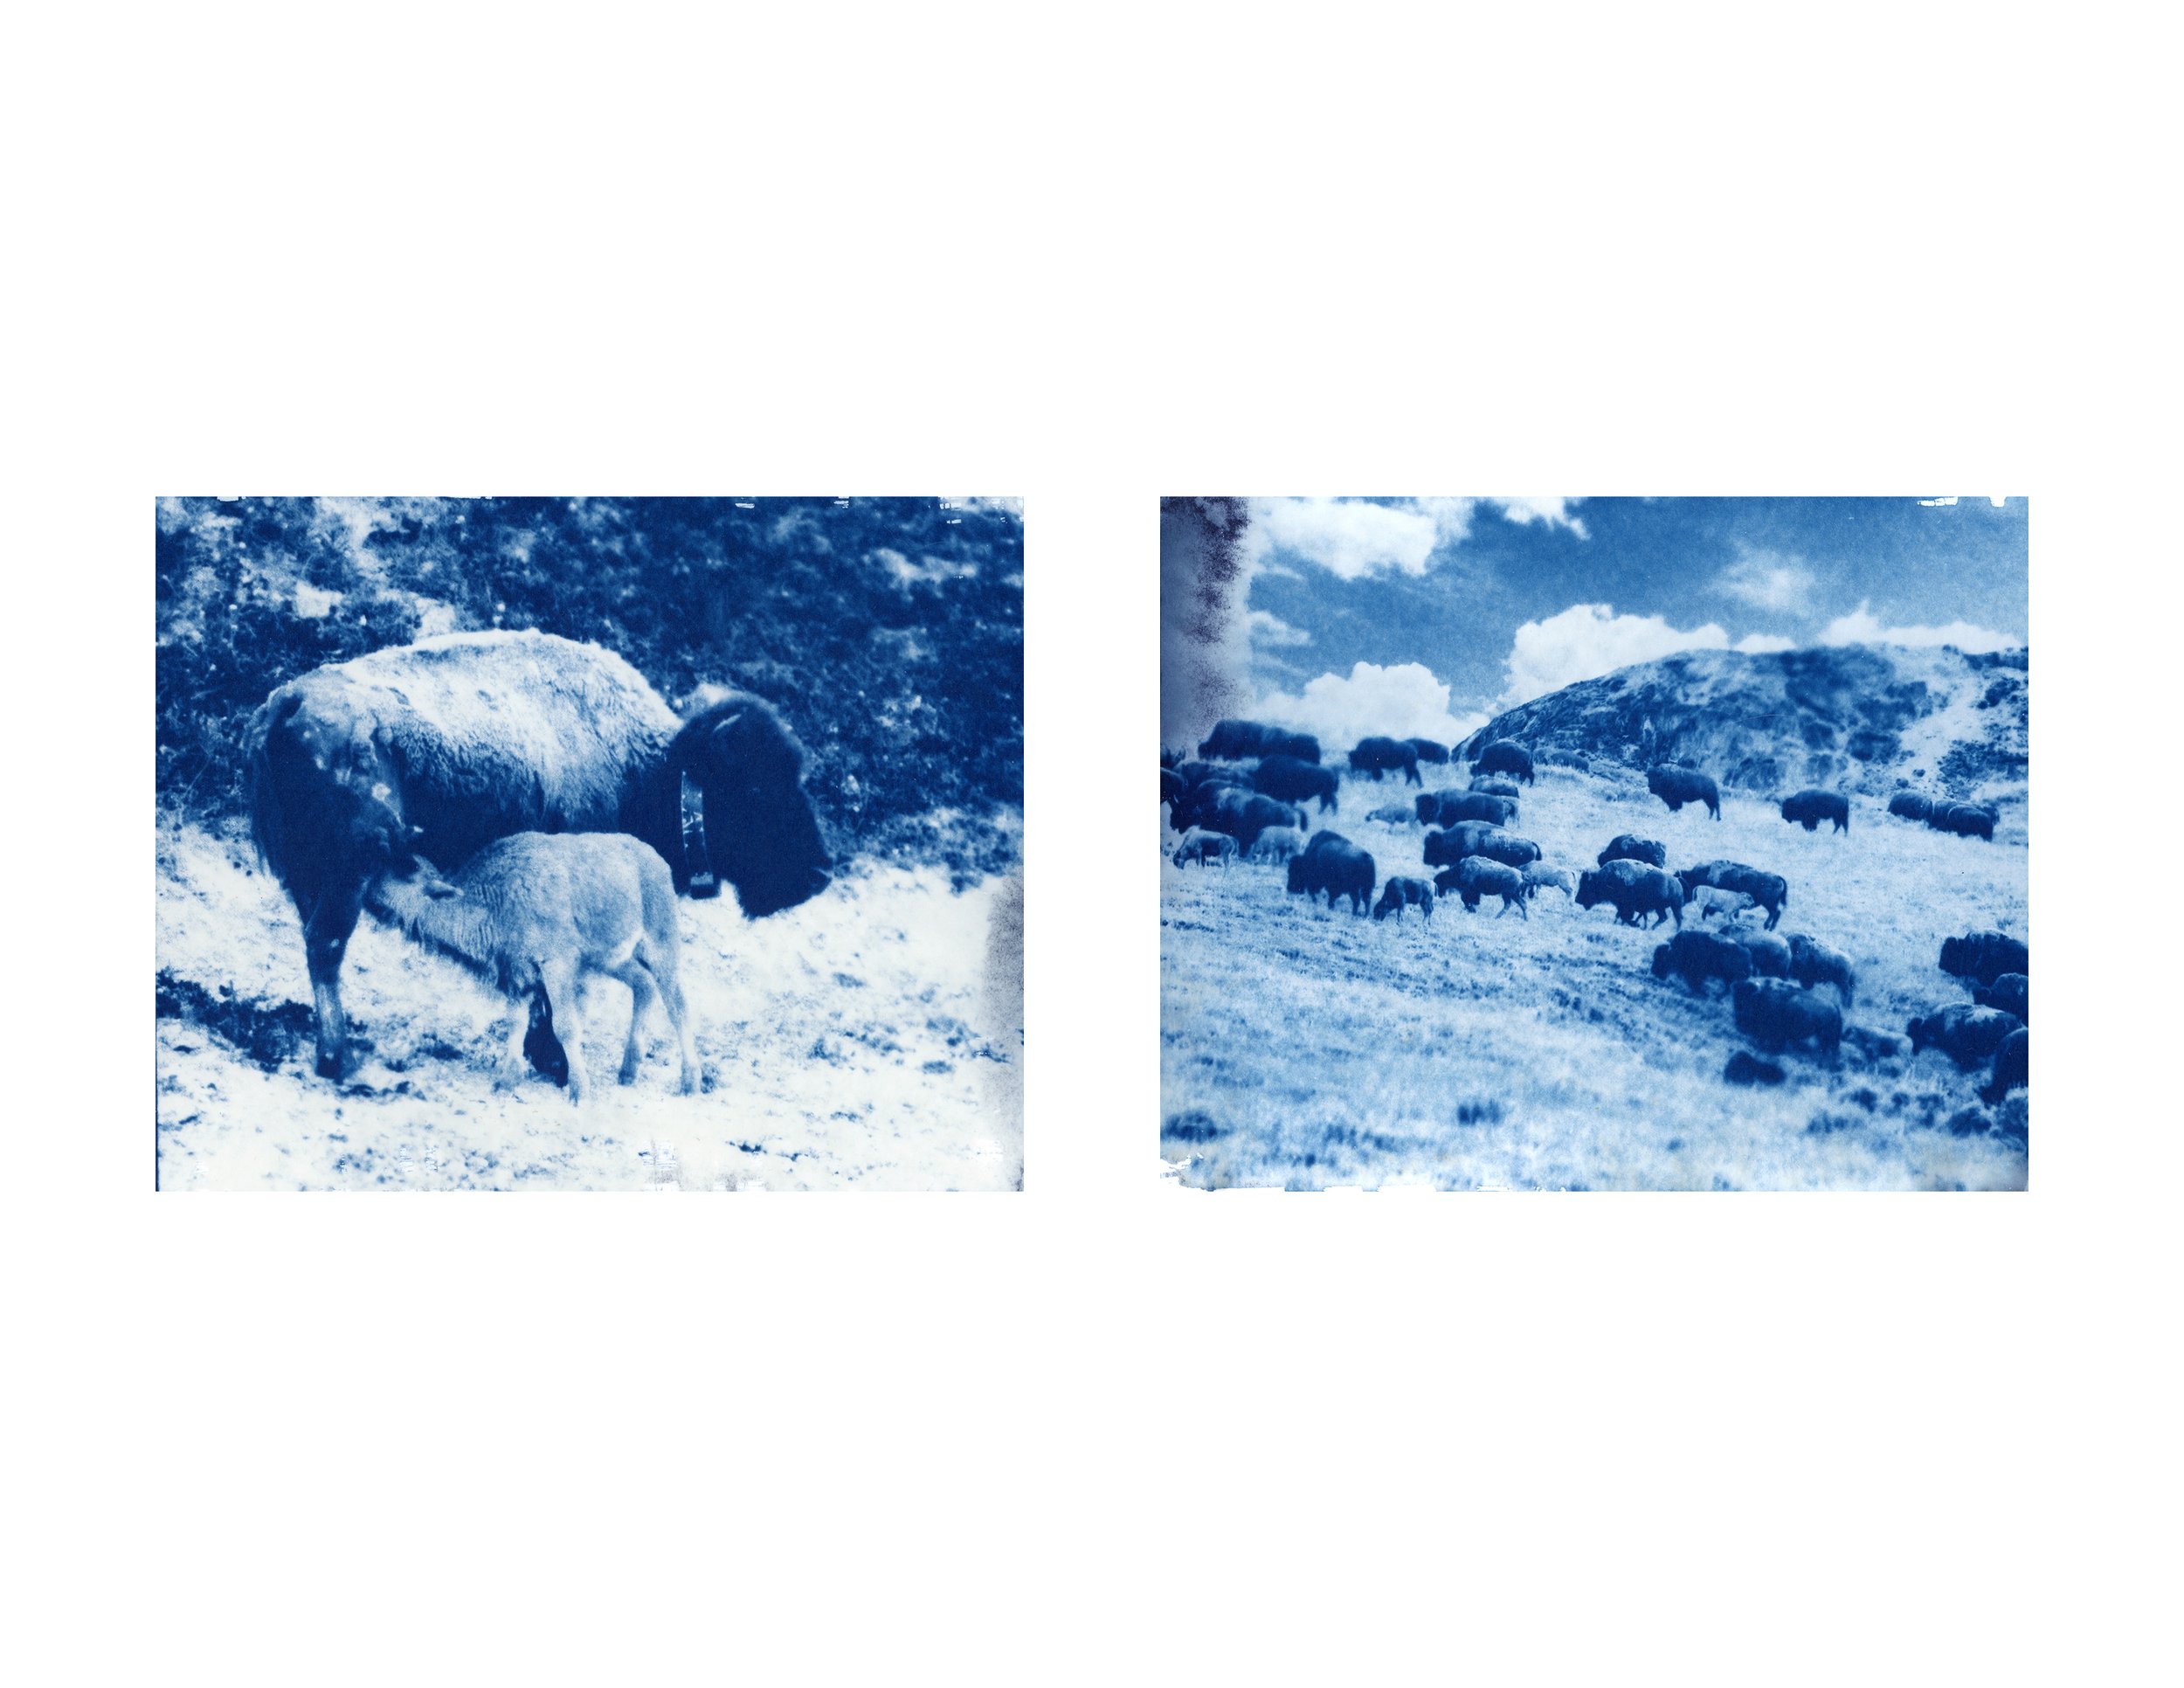 17_bison cyanotype.jpg